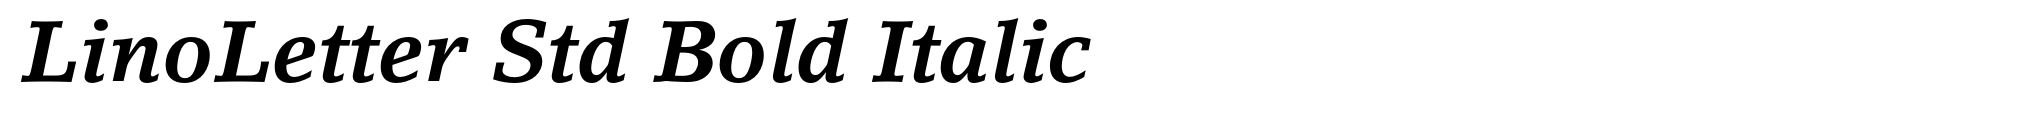 LinoLetter Std Bold Italic image